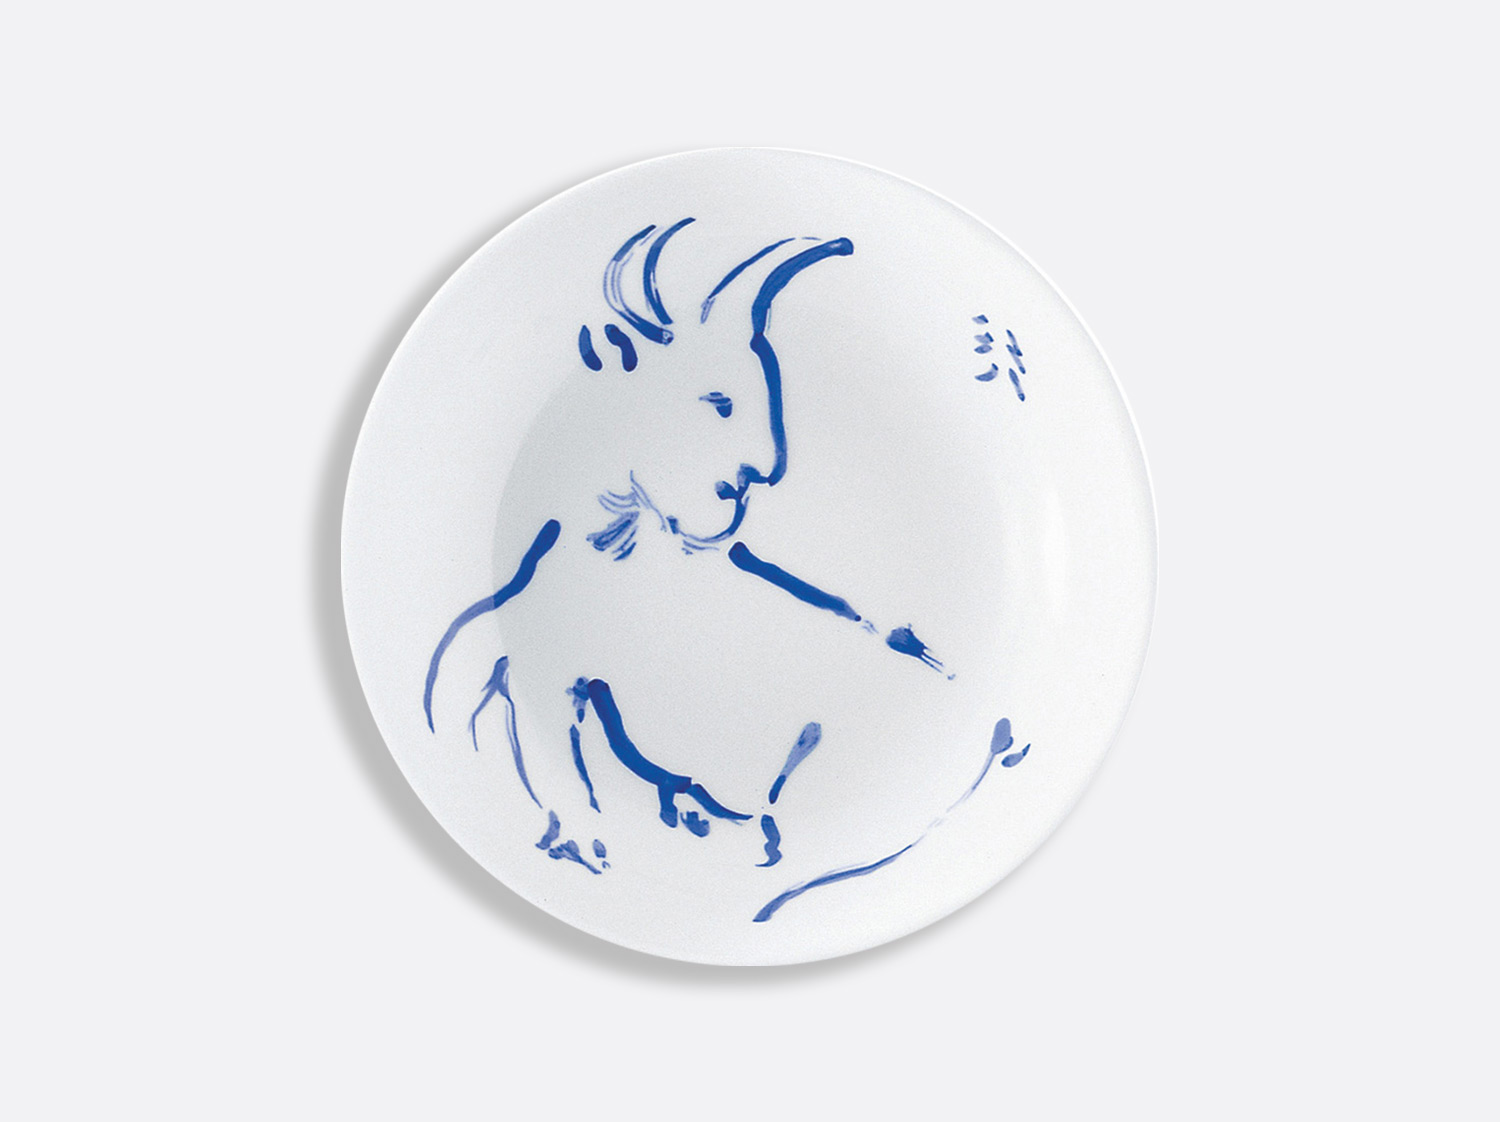 China "Fauna" Coupe soup 19 cm of the collection Pour ida | Bernardaud